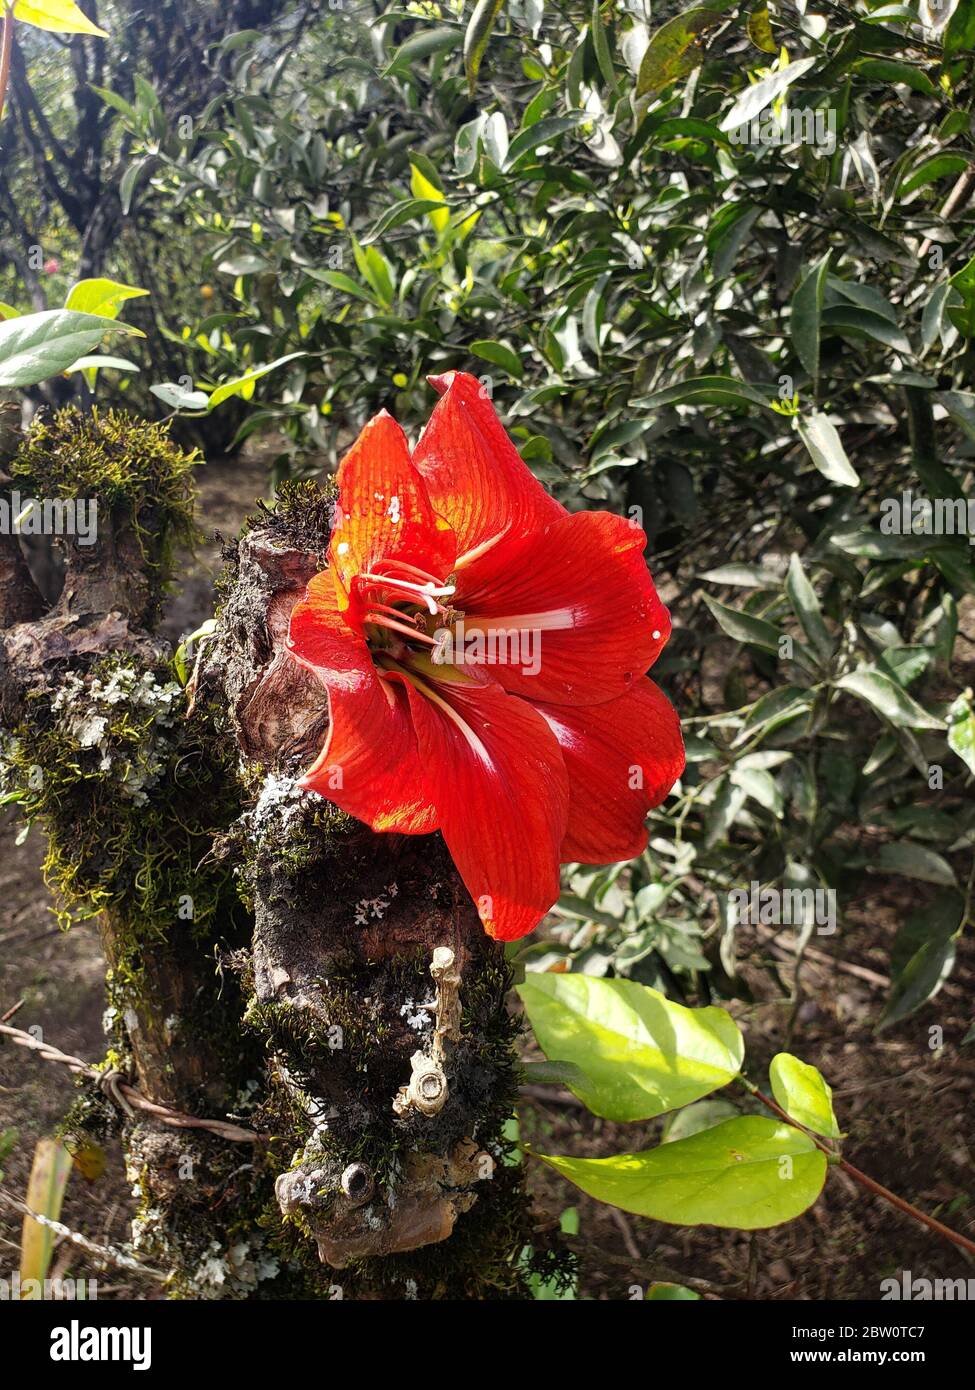 Red flower in the garden Stock Photo